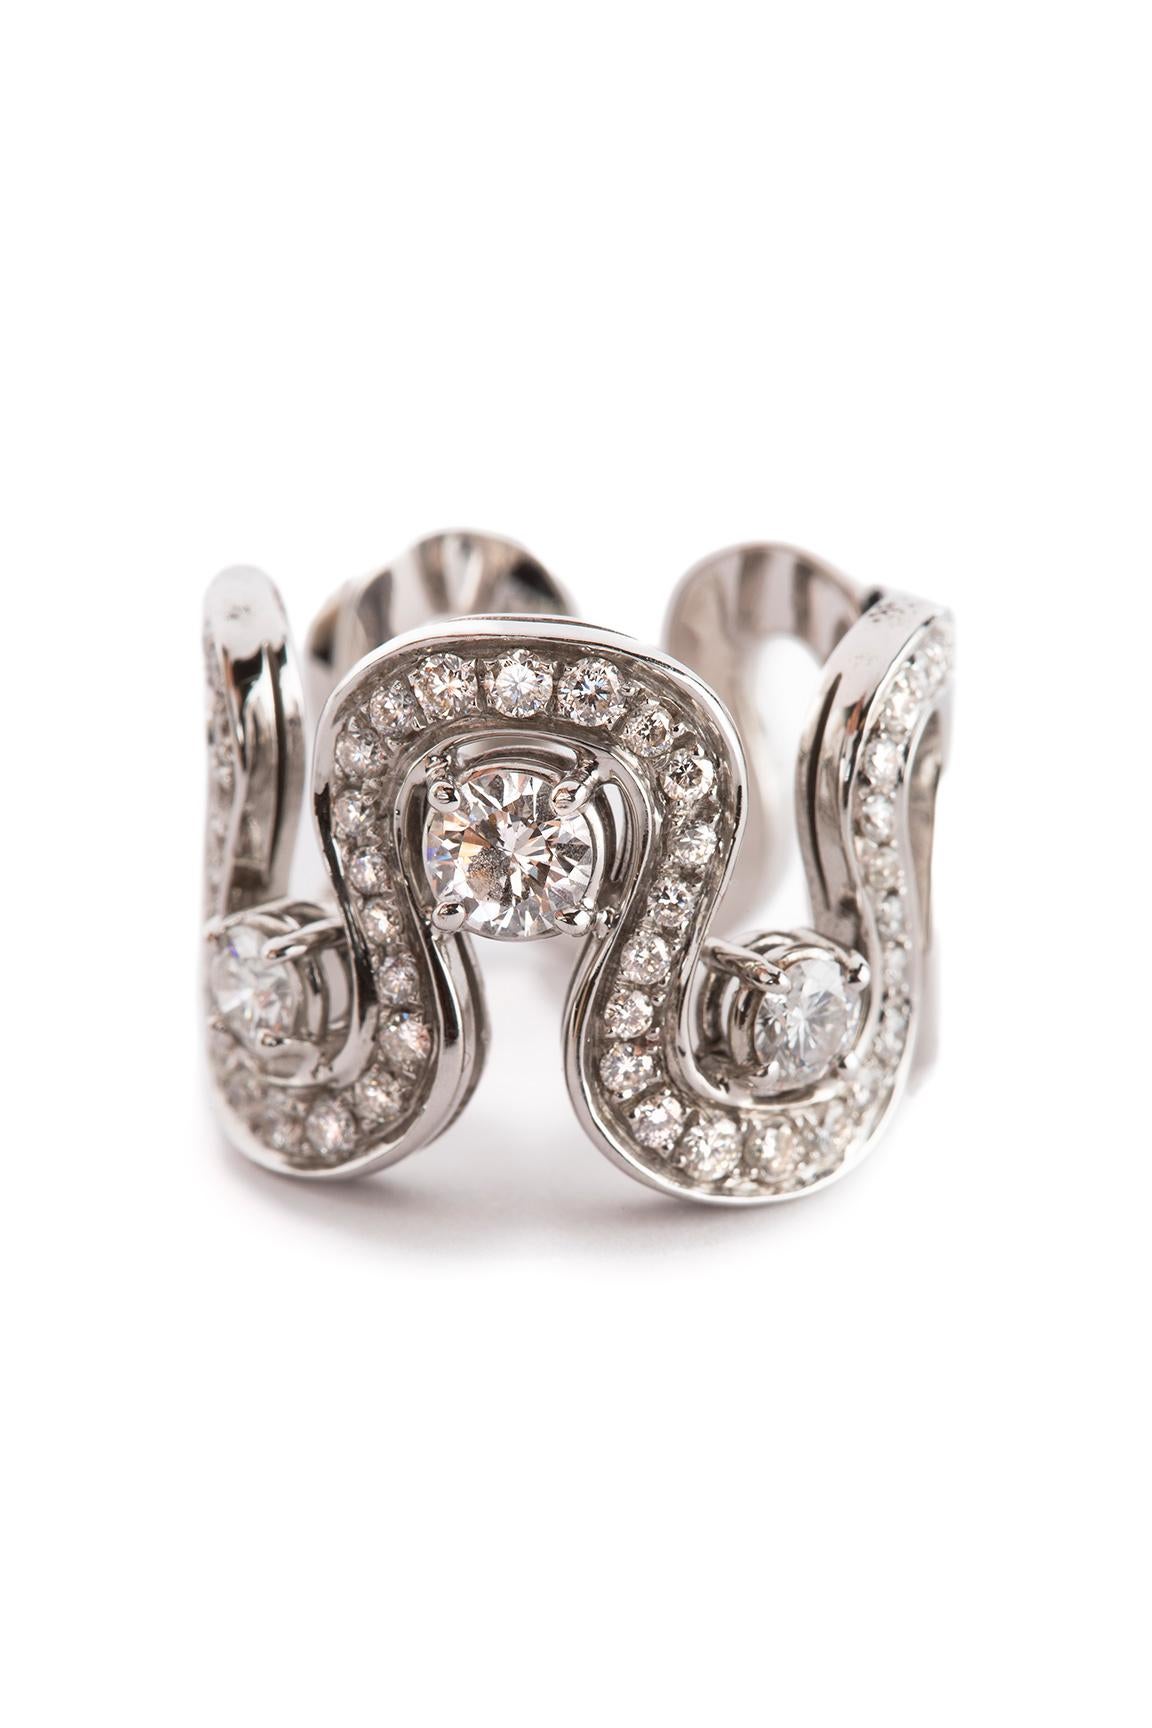 Brilliant Cut 1.54 Karats G Color VVs1 White Diamonds 18 Karat White Gold Design Ring For Sale